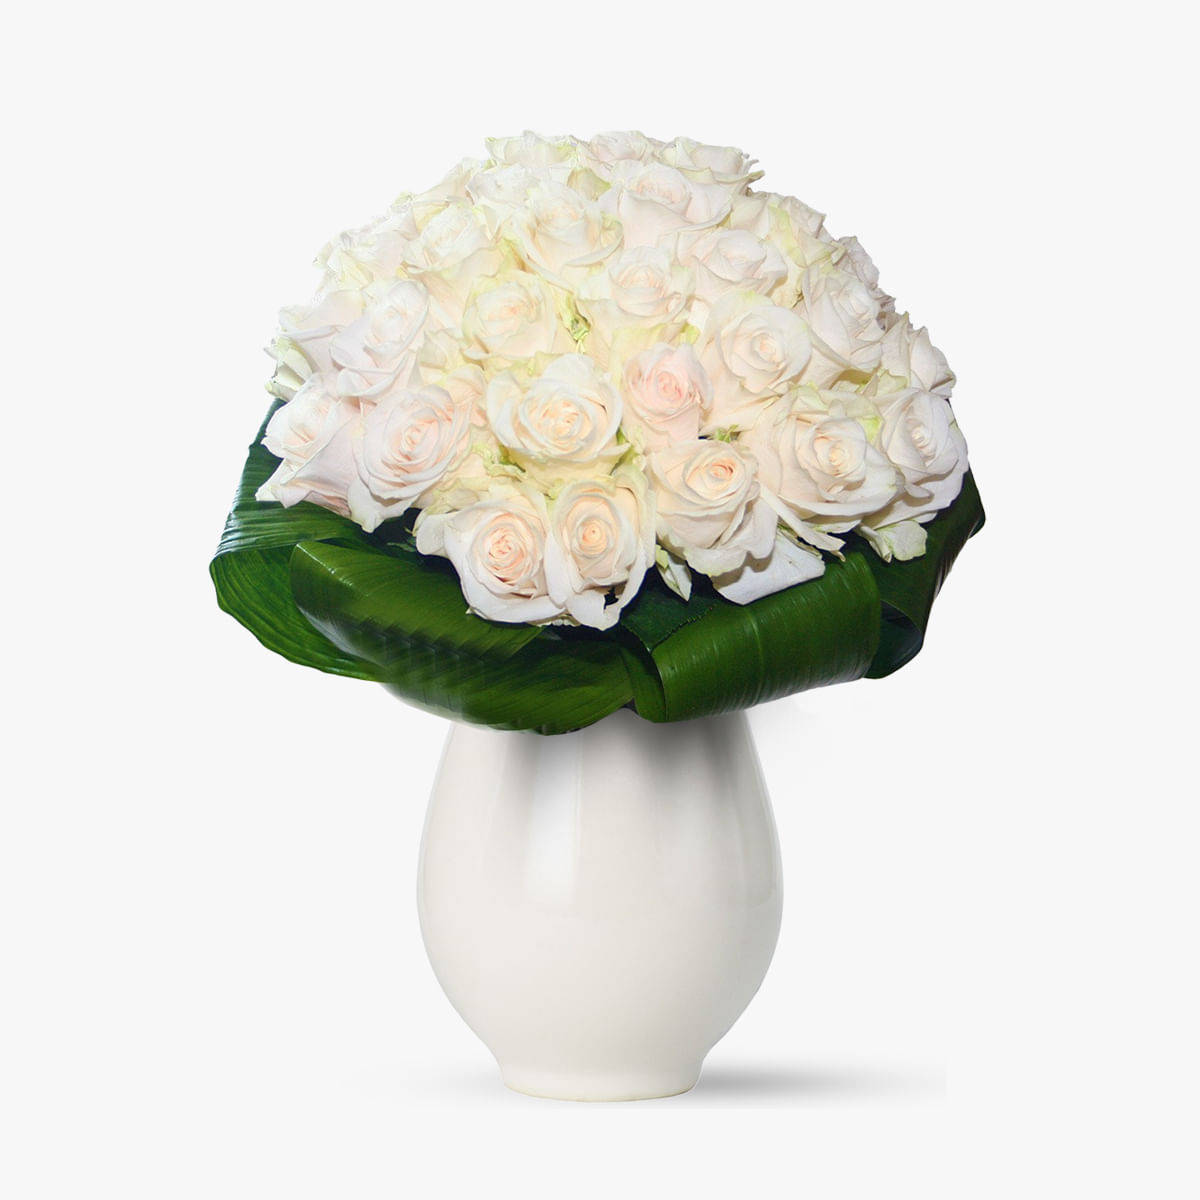 Buchet de 29 trandafiri albi – Standard albi